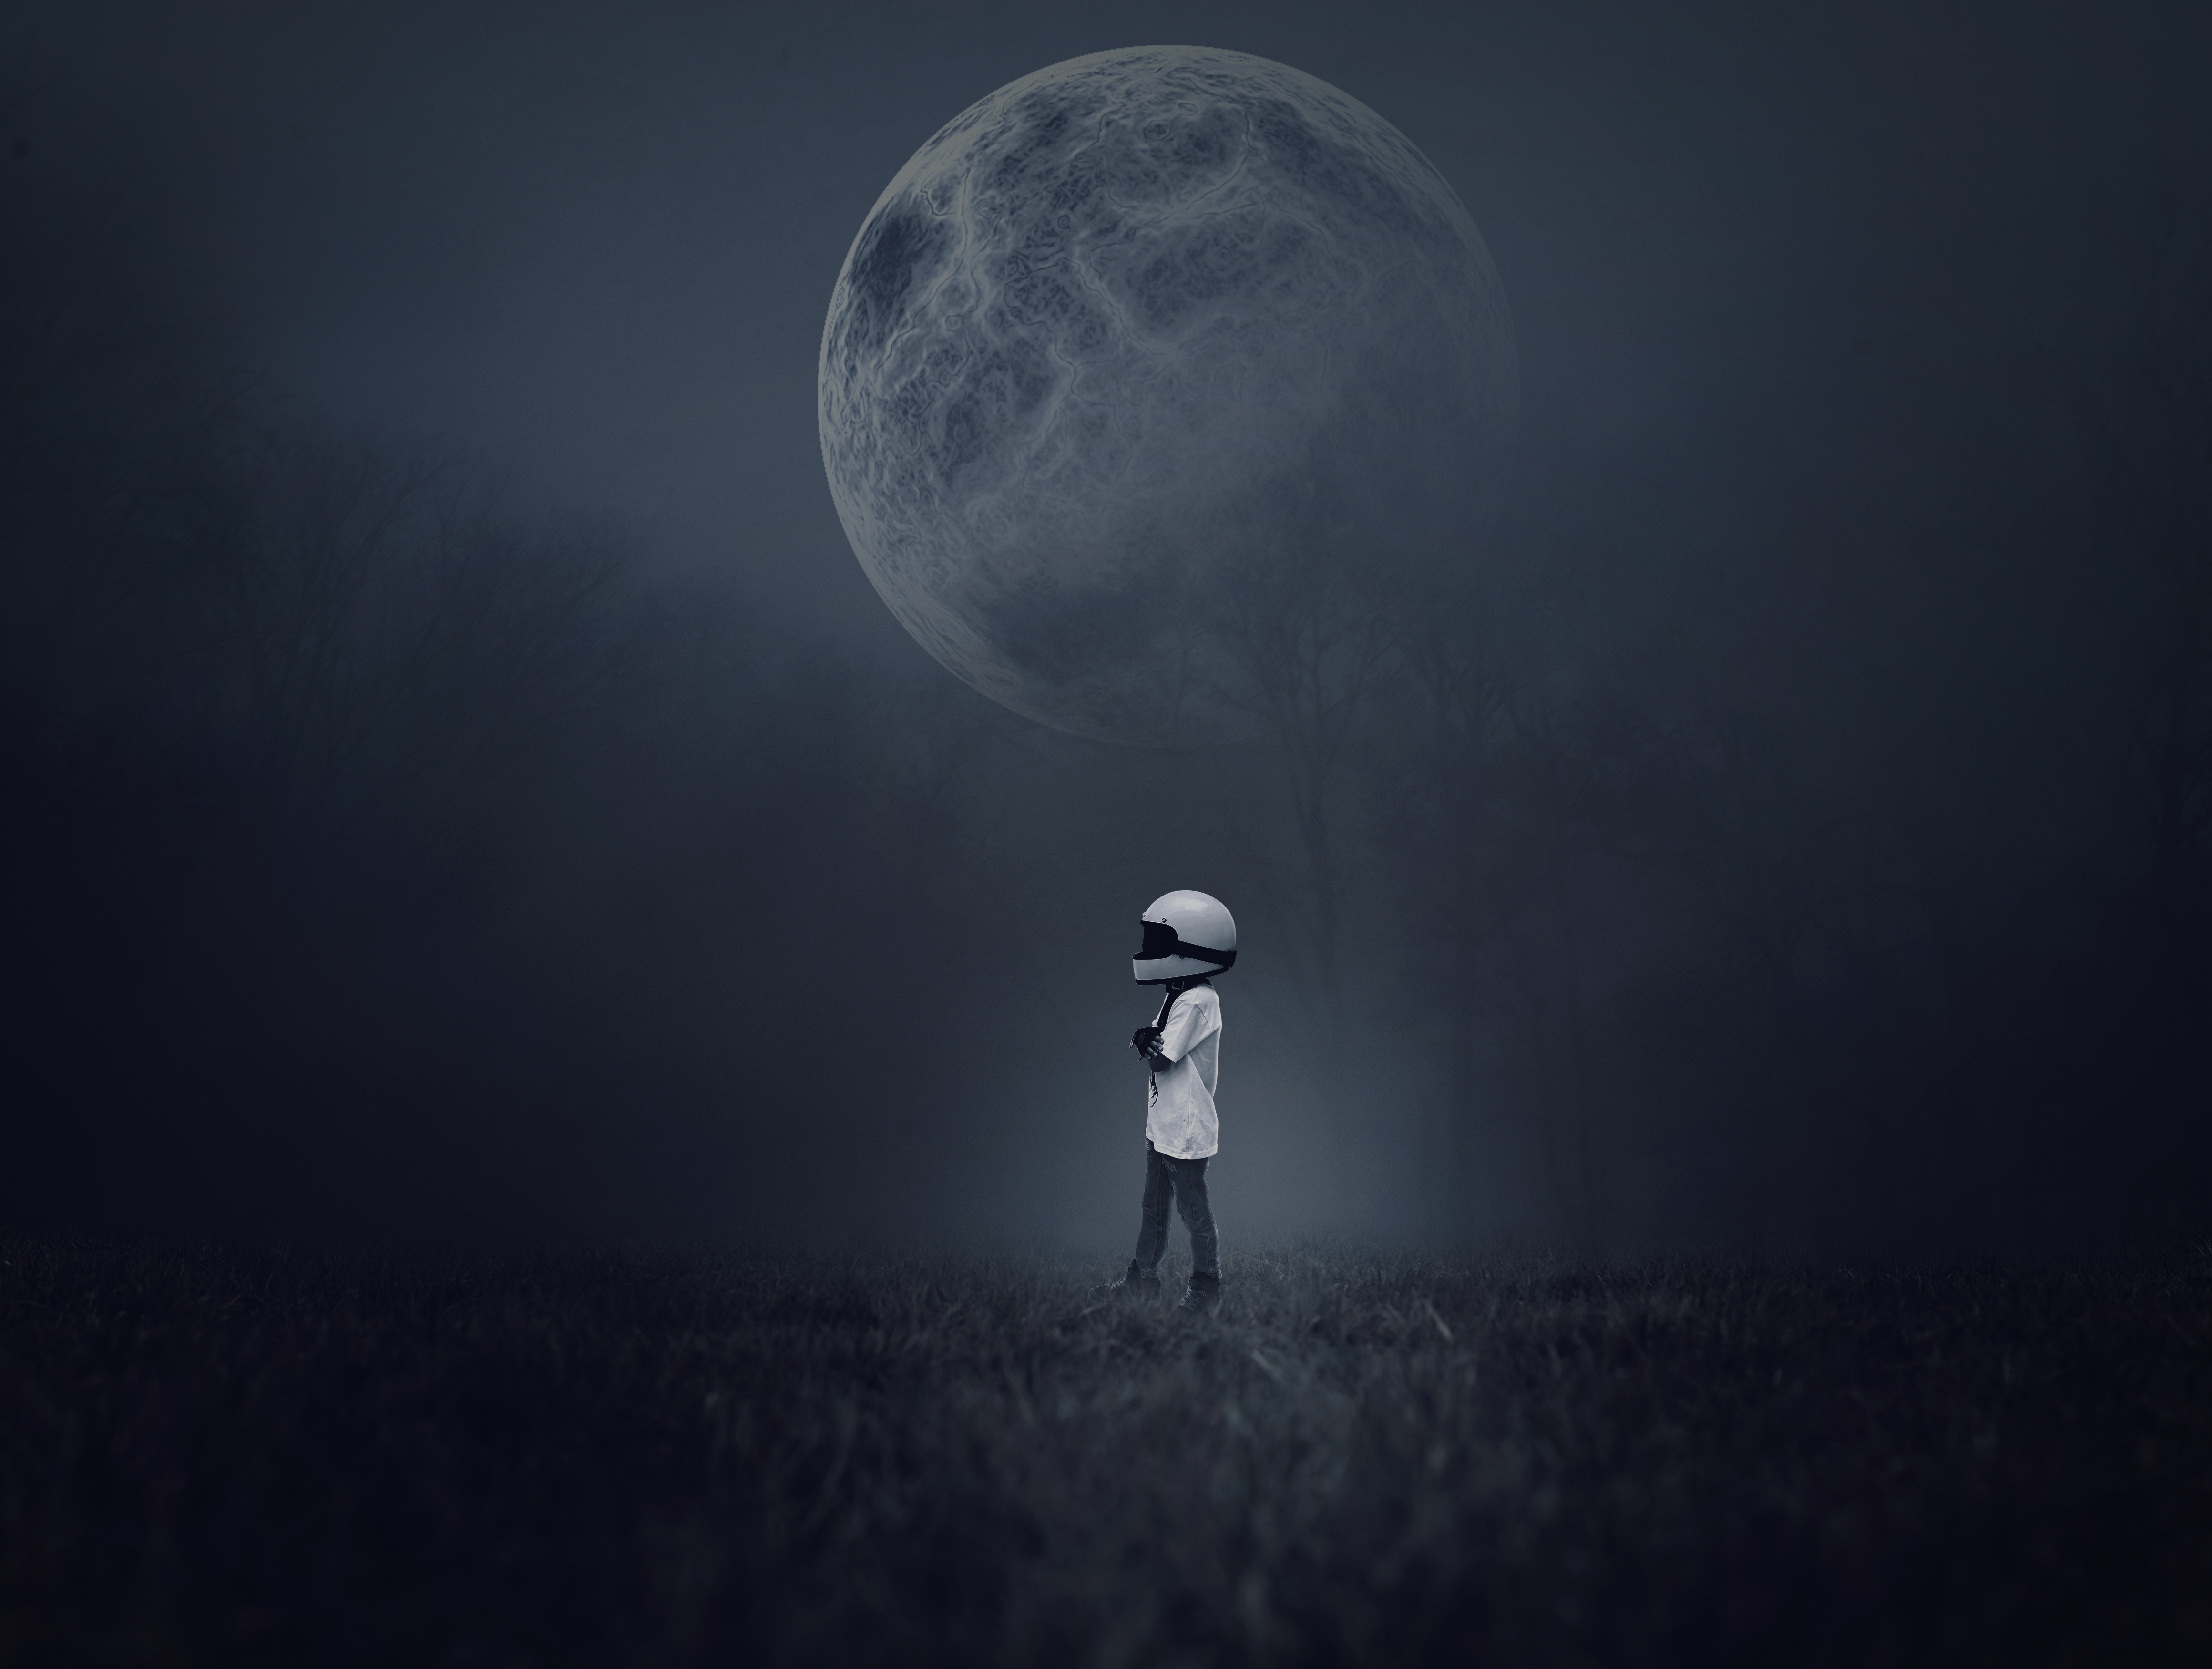 HD wallpaper, Alone, Foggy, Helmet, Moon, Boy, Dream